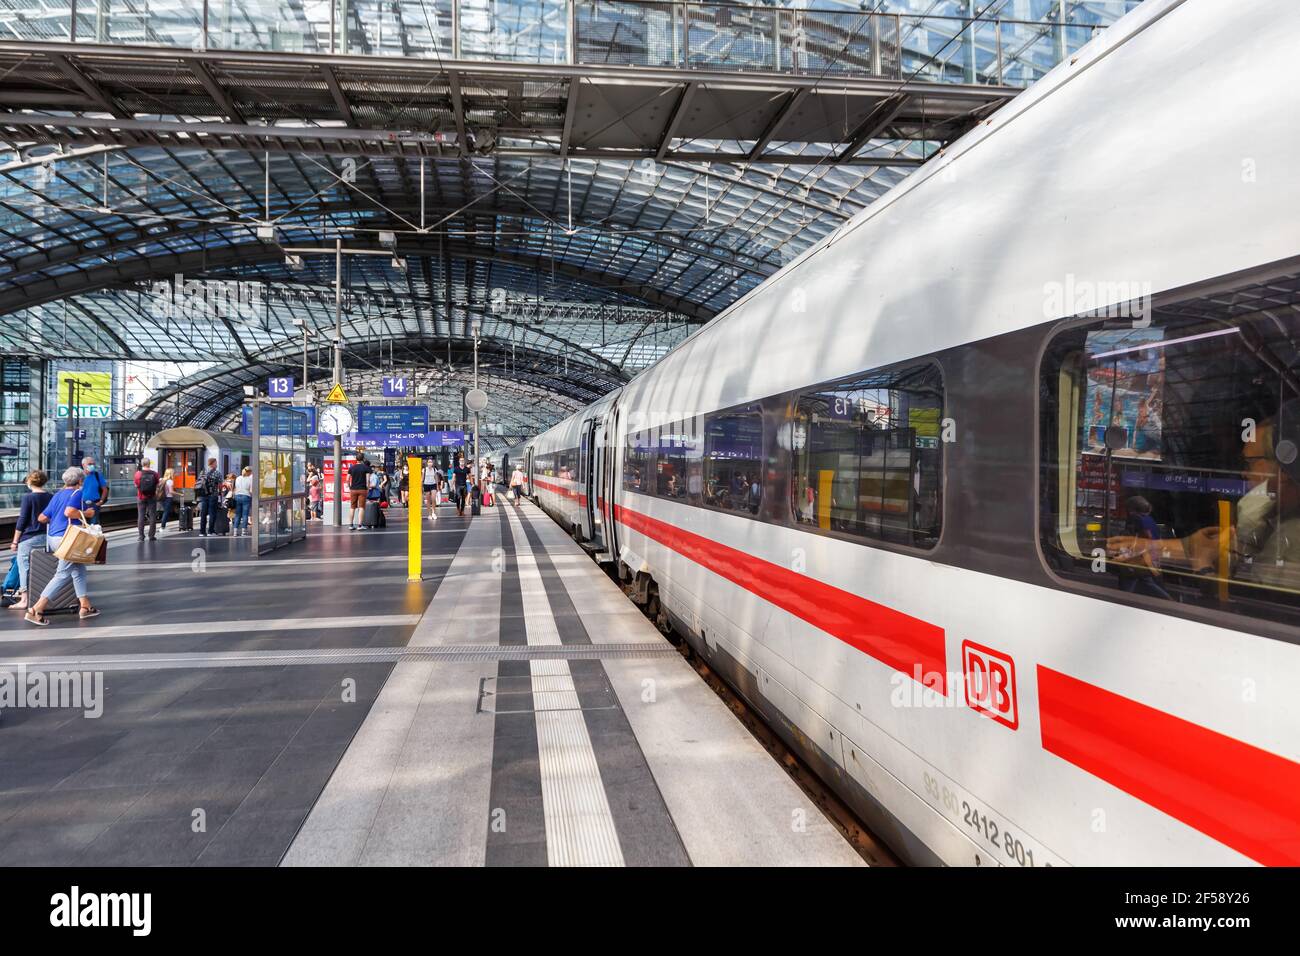 Berlin, Germany - August 20, 2020: ICE 4 high-speed train at Berlin main railway station Hauptbahnhof Hbf in Germany. Stock Photo